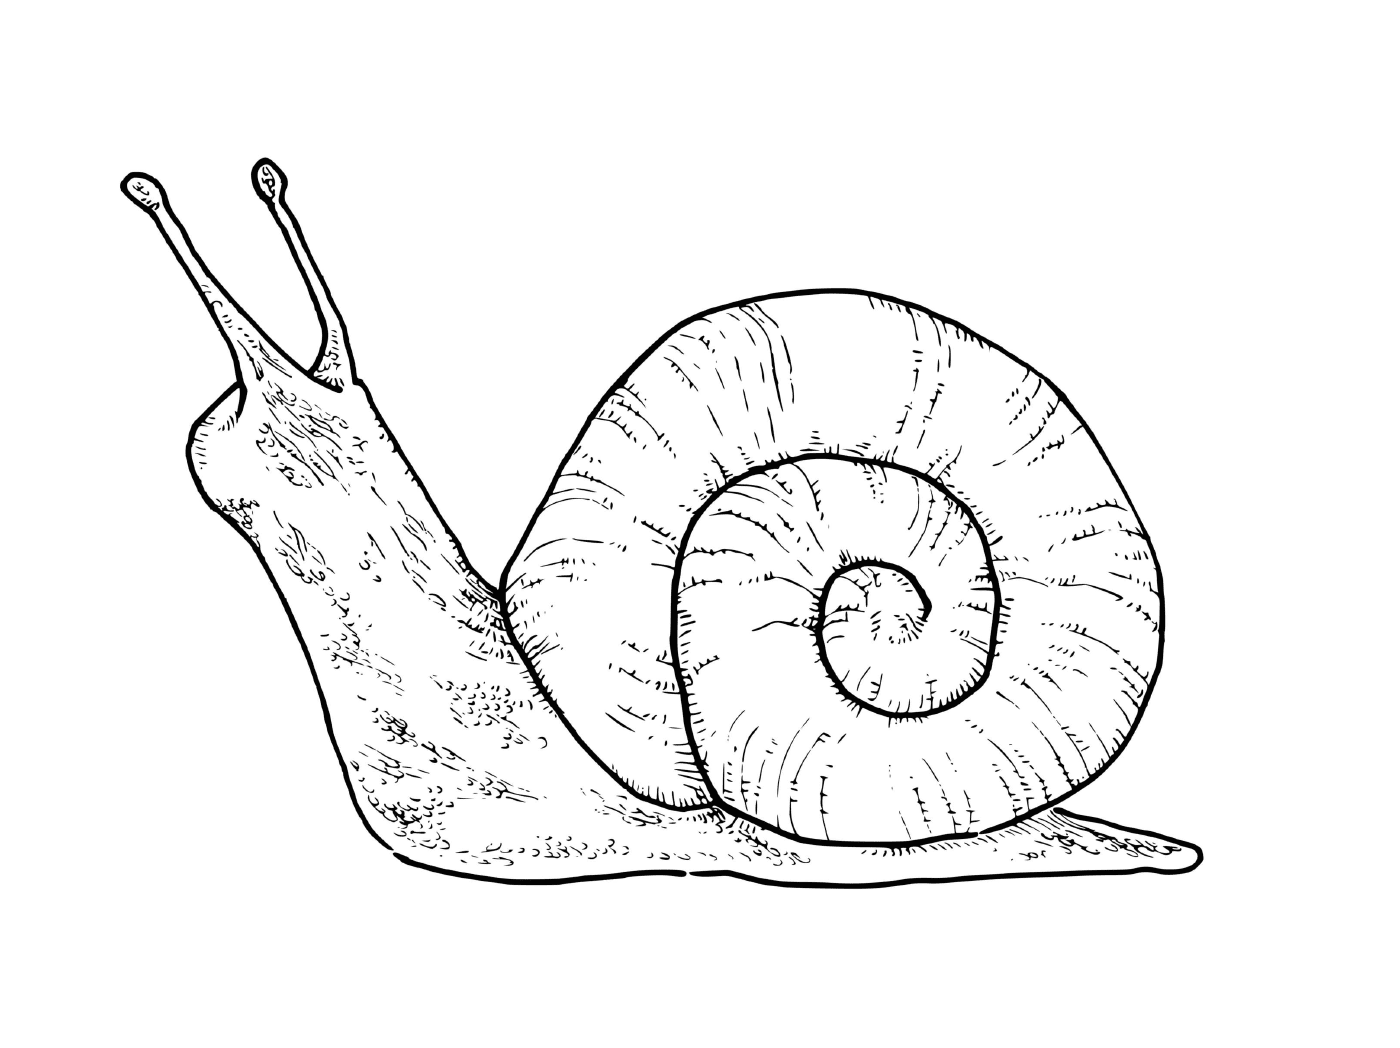  A quiet terrestrial snail on the ground 